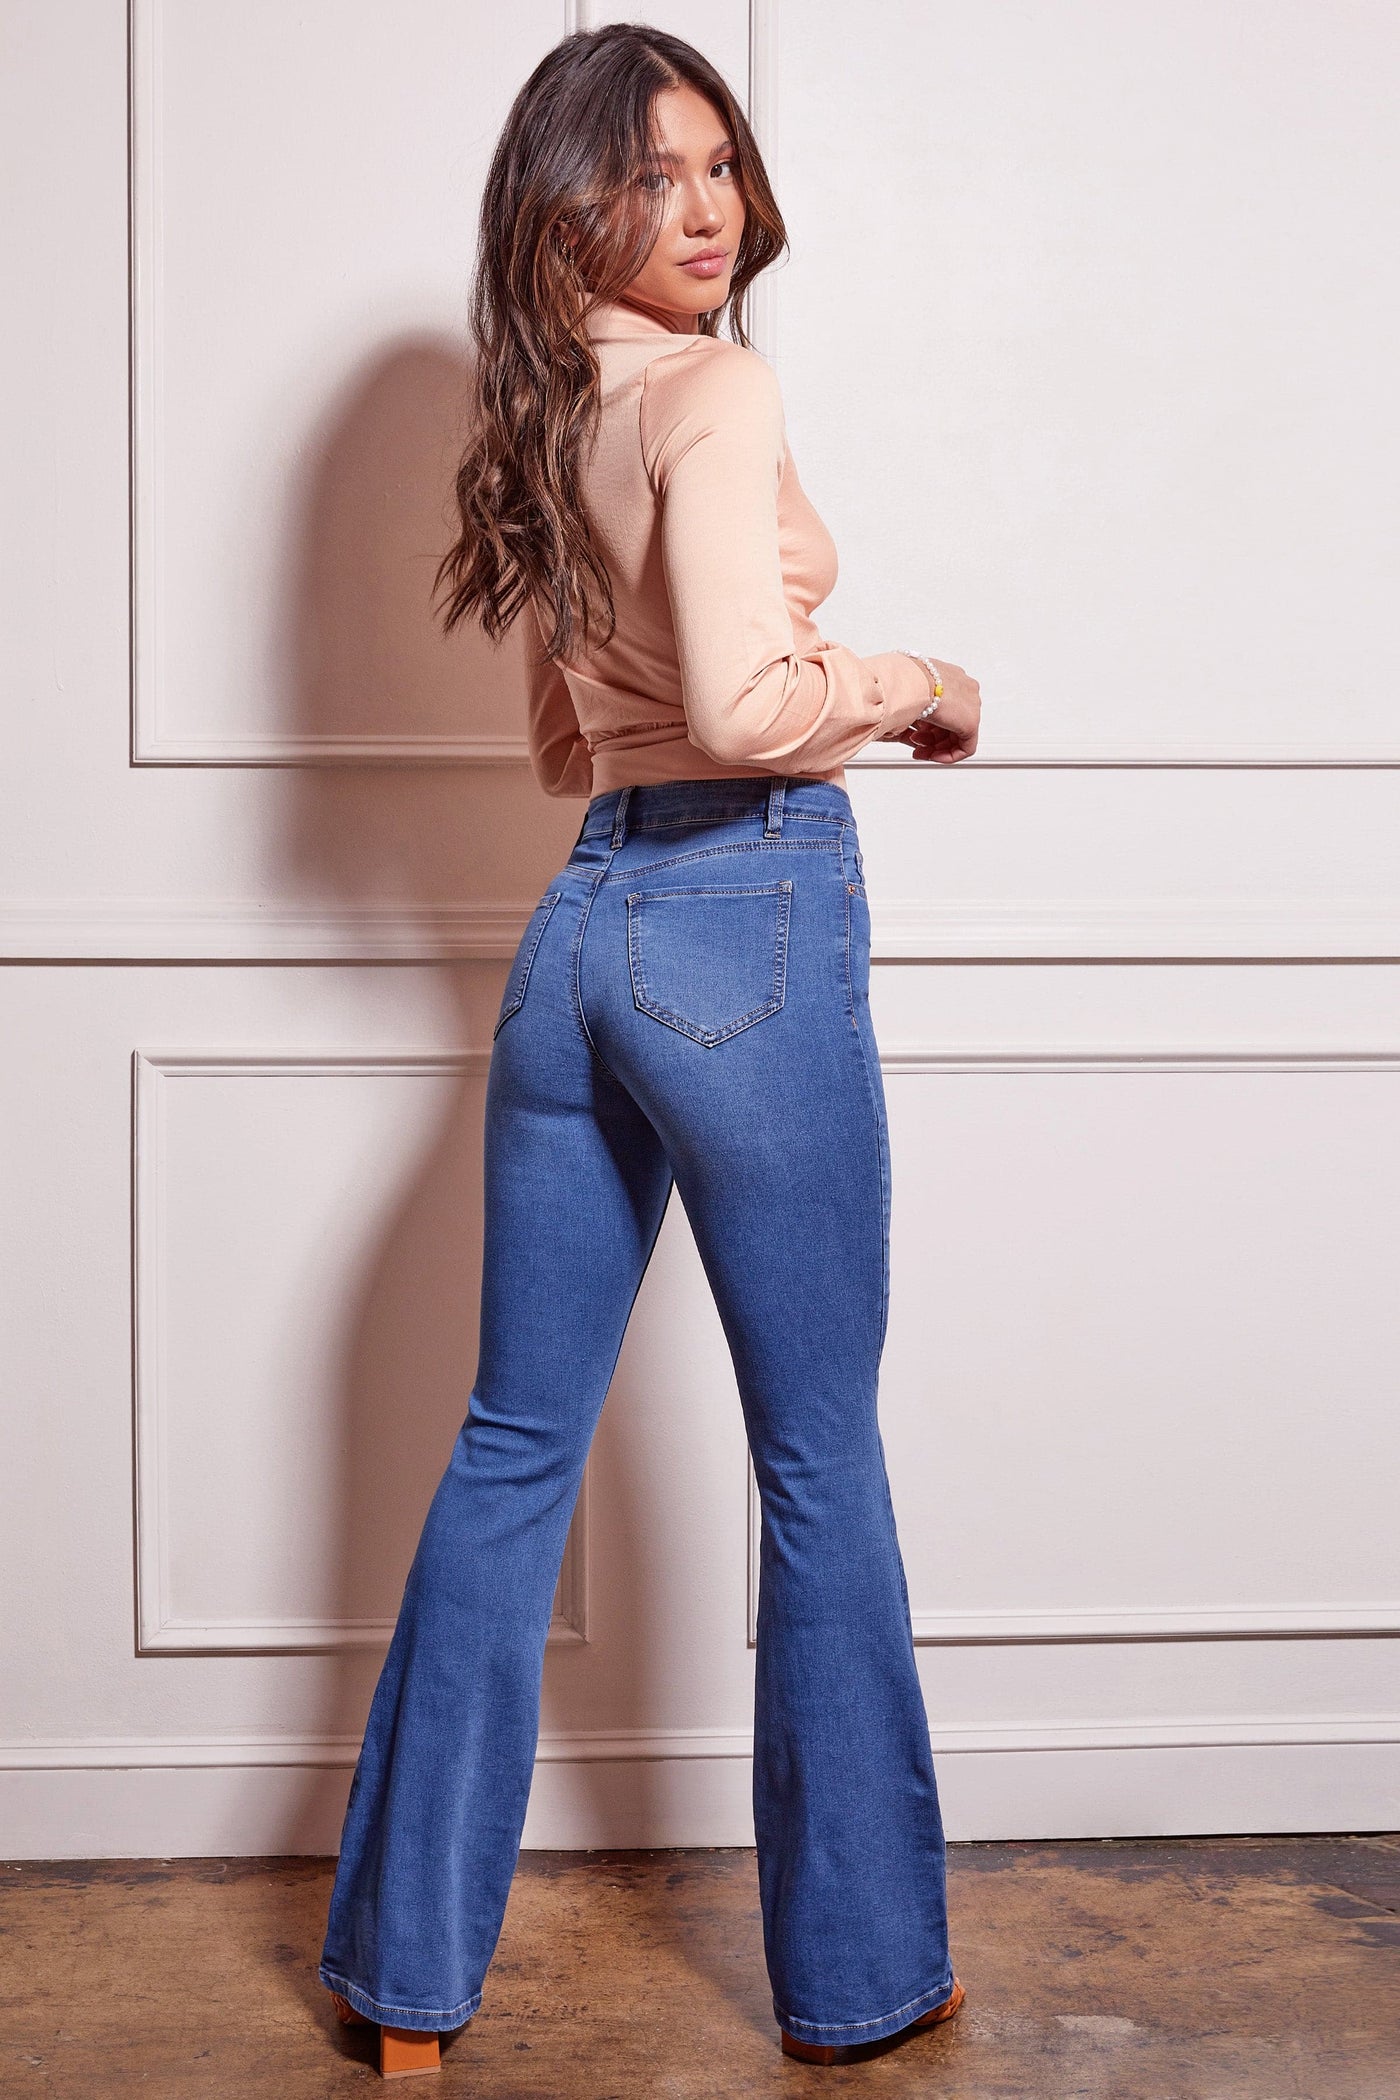 Women's Essential Hyperdenim  Flare Jeans - Long & Regular Inseam